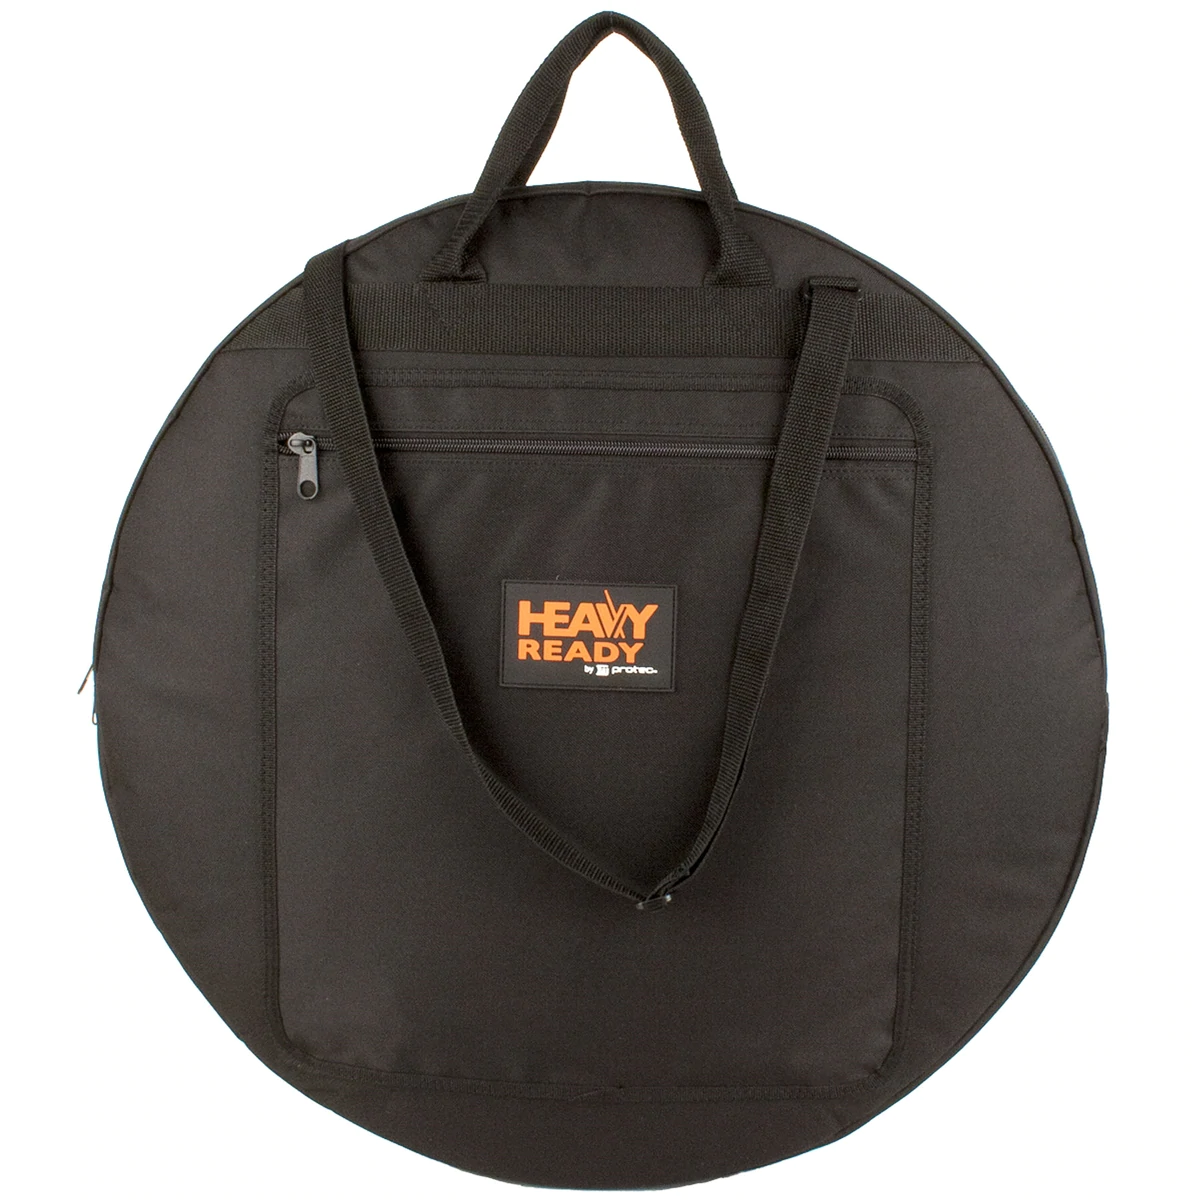 PROTEC Heavy Ready 22" Cymbal Bag